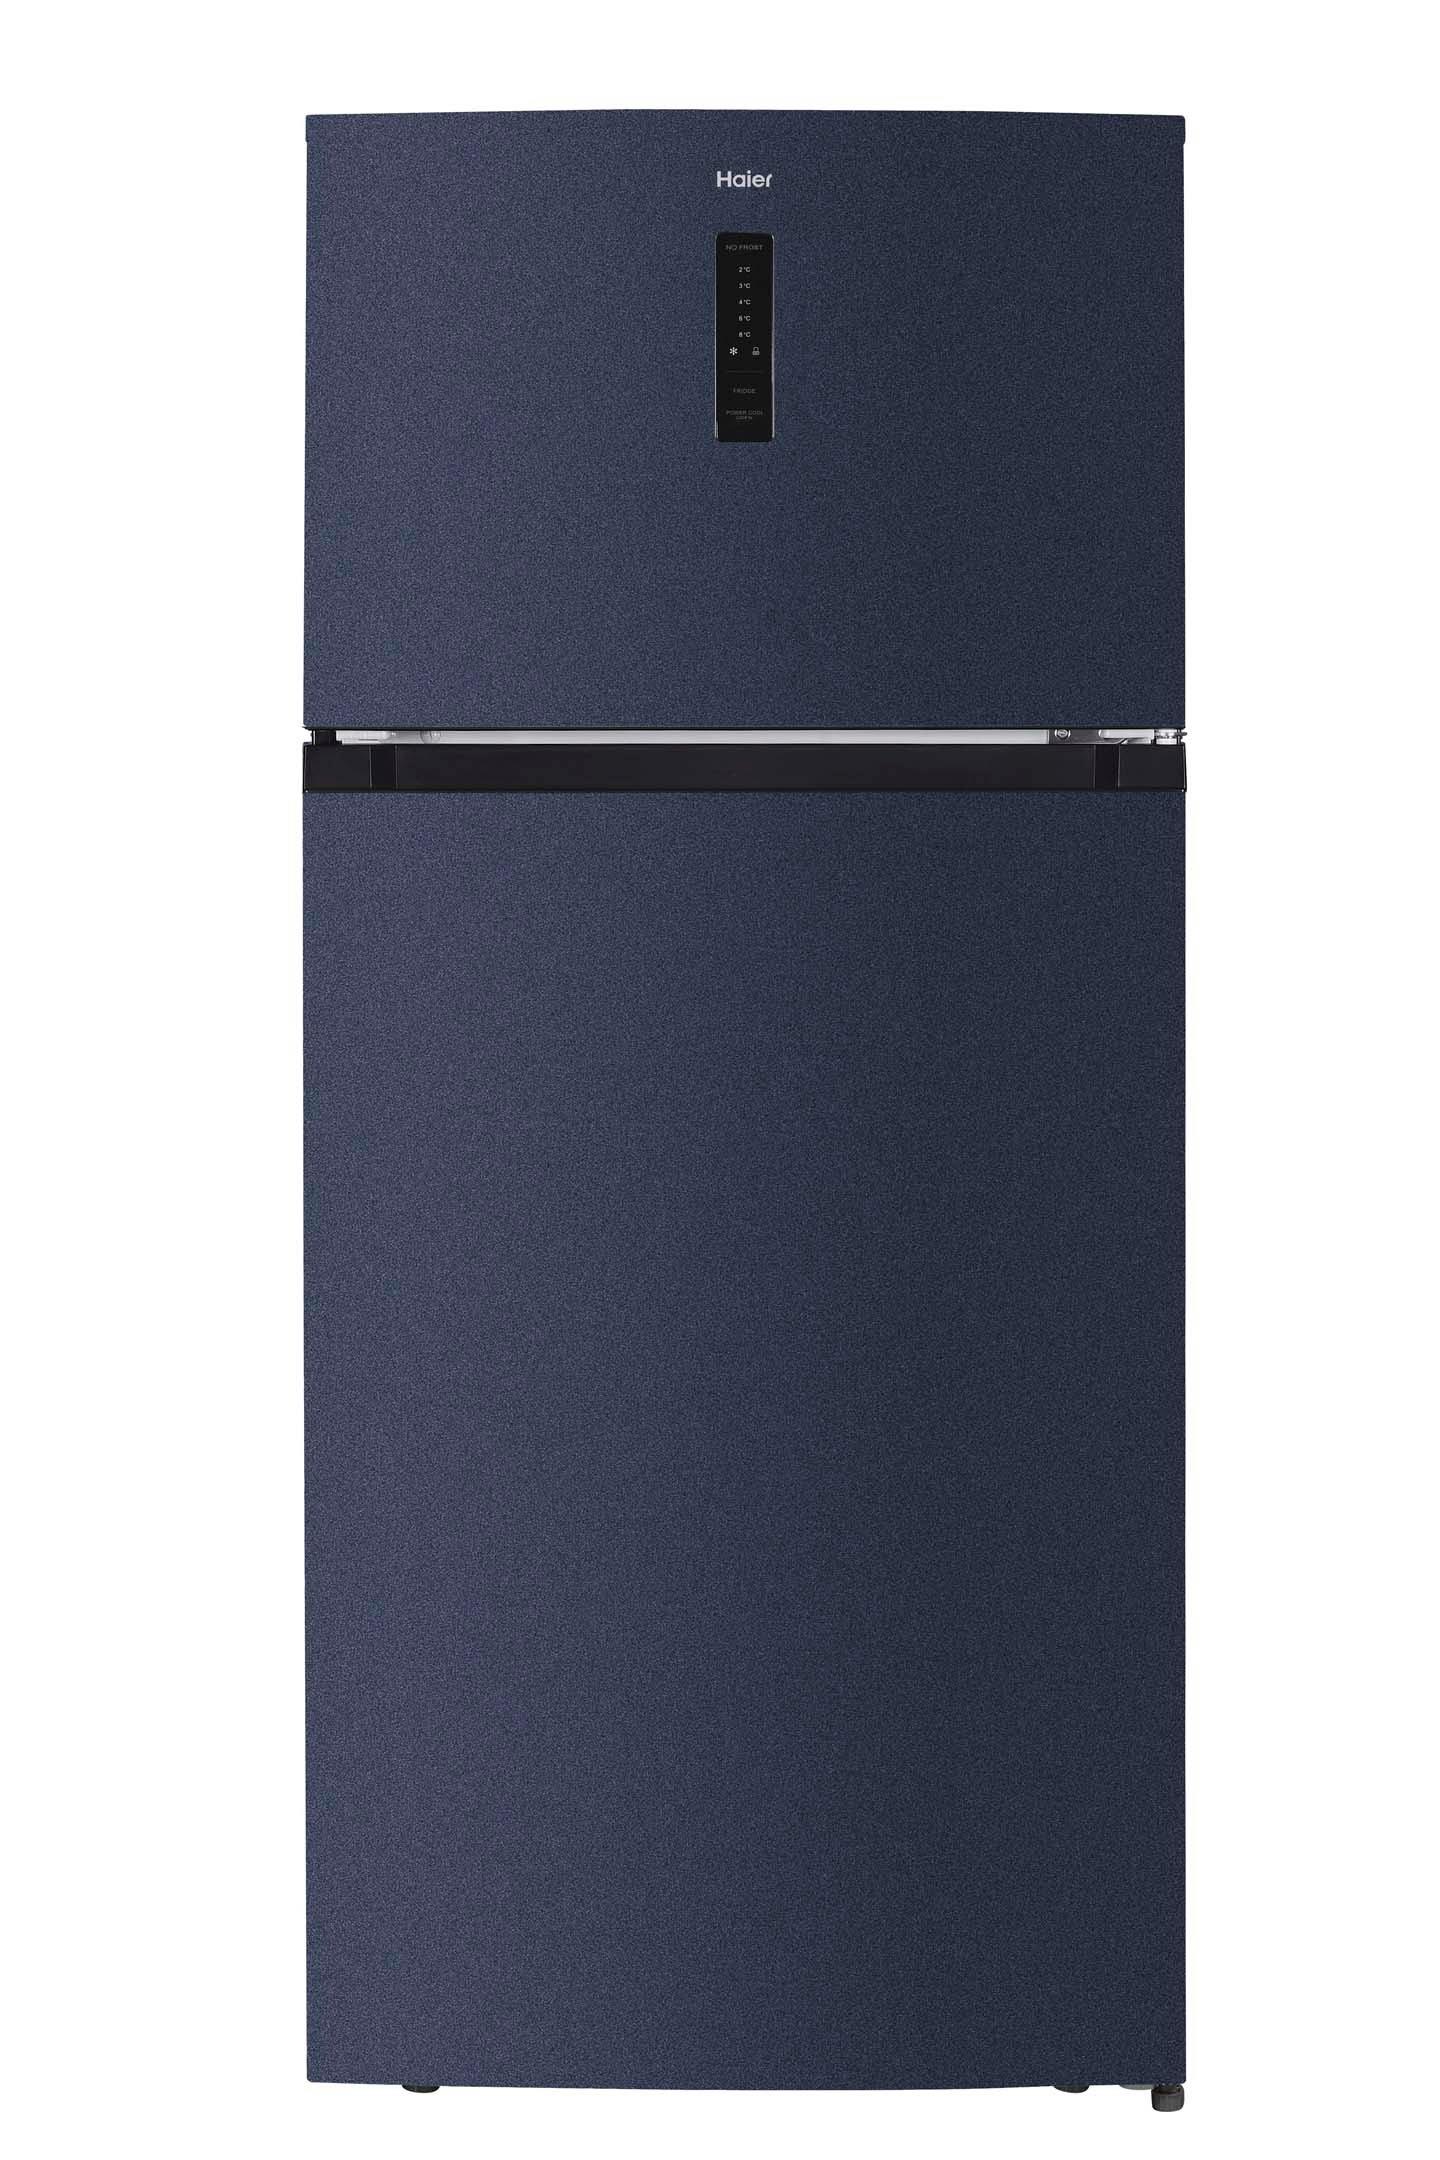 Haier Refrigerator 14.5Cu.ft, Freezer 4.1Cu.ft, Inverter, Gemstone 